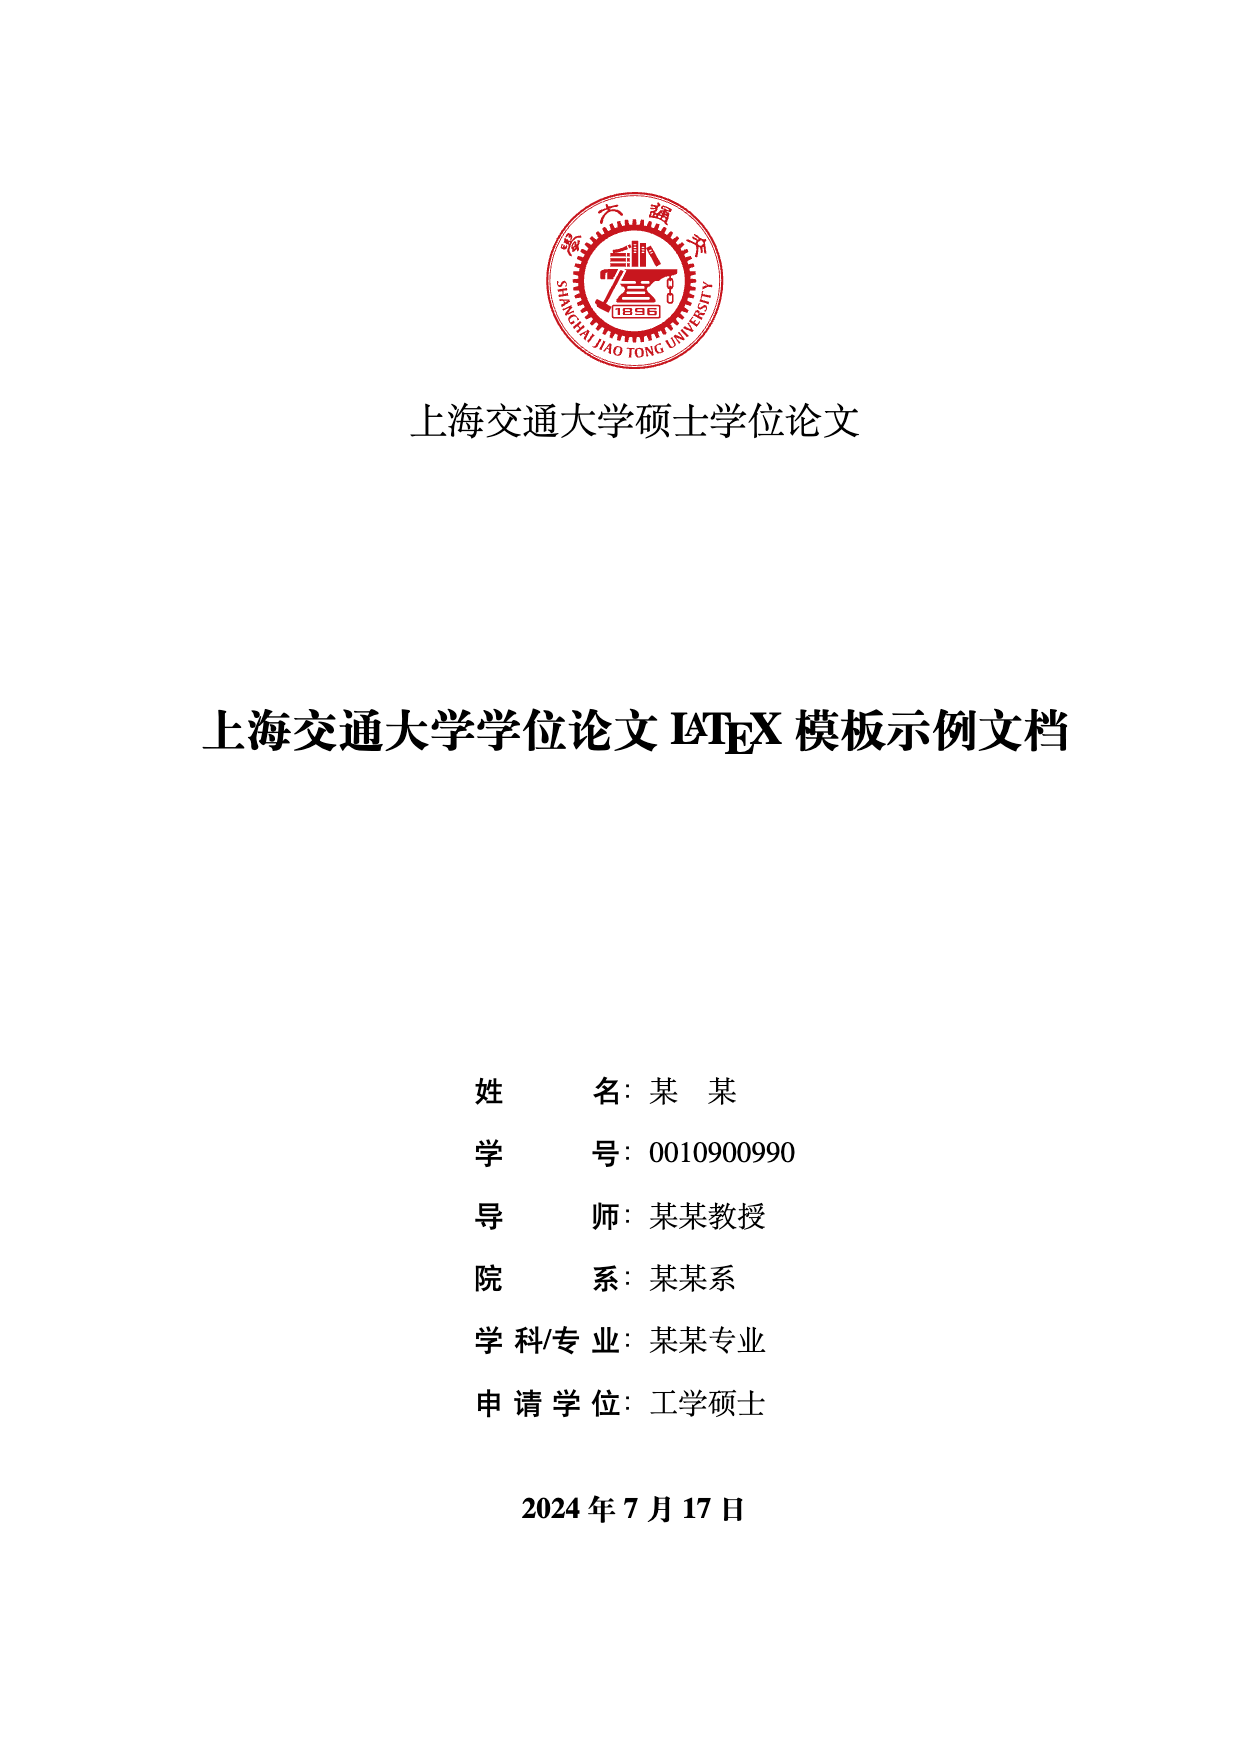 SJTUThesis - 上海交通大学 LaTeX 论文模板